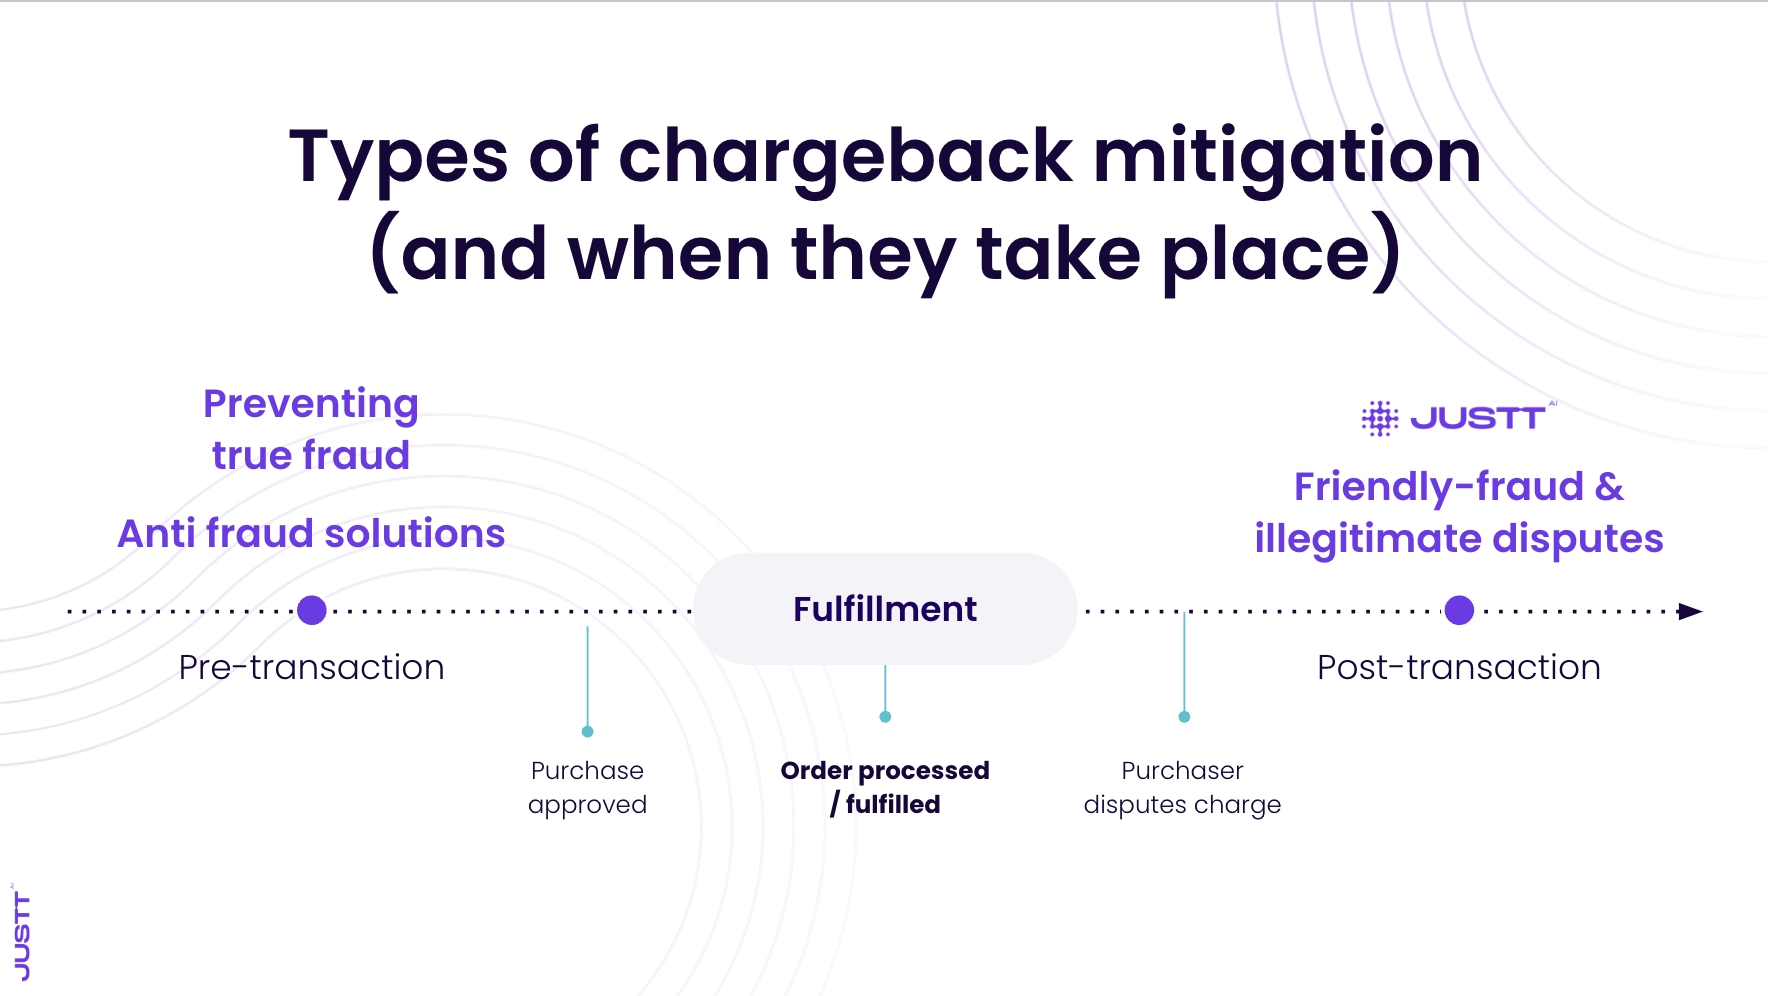 Types of chargeback mitigation